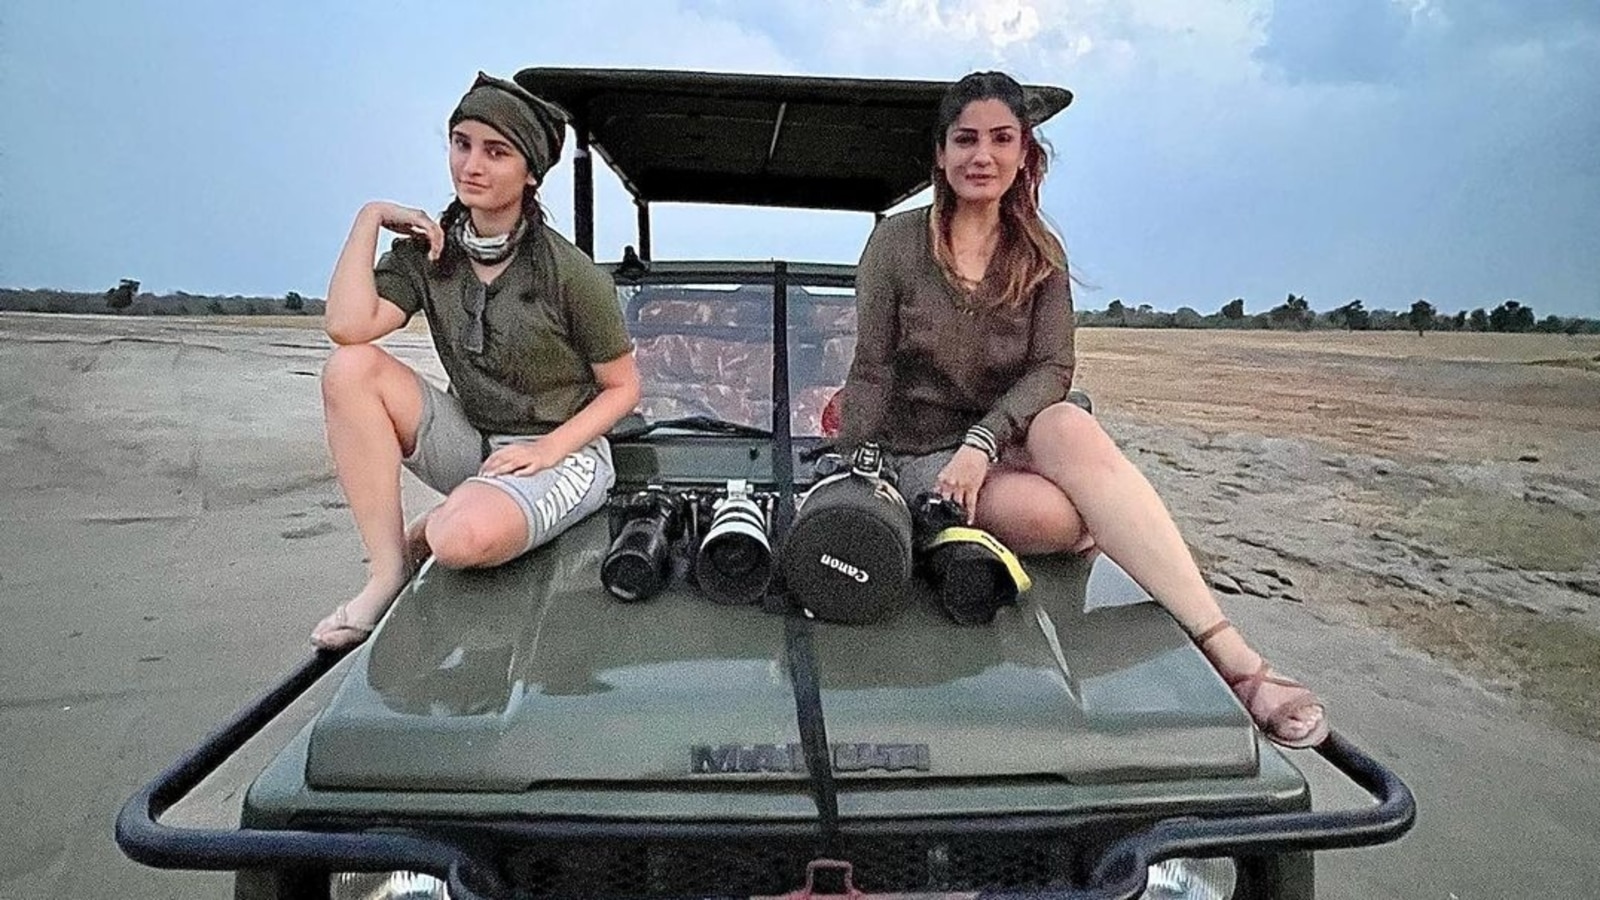 Raveena Tandonxxxx - Raveena Tandon shares pics with daughter Rasha Thadani from wildlife safari  trip | Bollywood - Hindustan Times